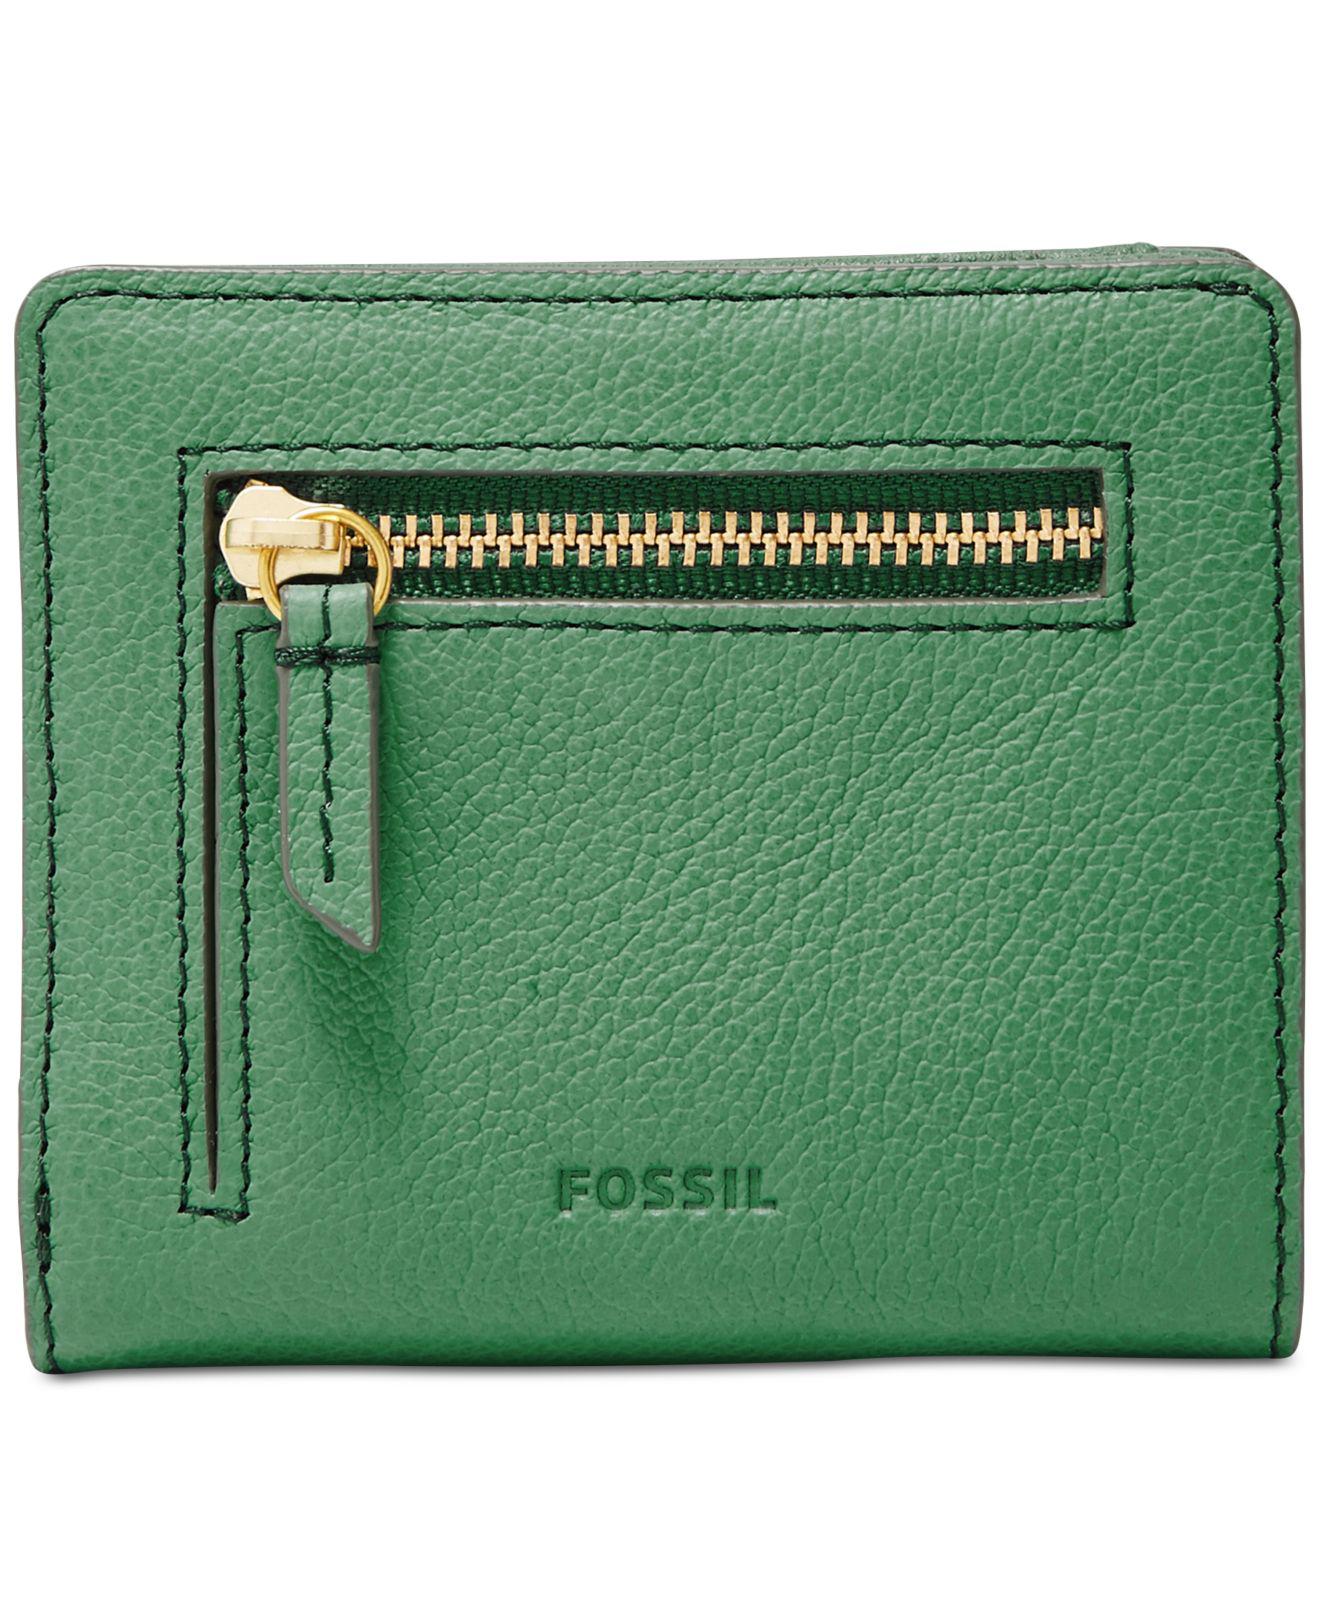 Fossil Emma Rfid Bifold Wallet in Green | Lyst